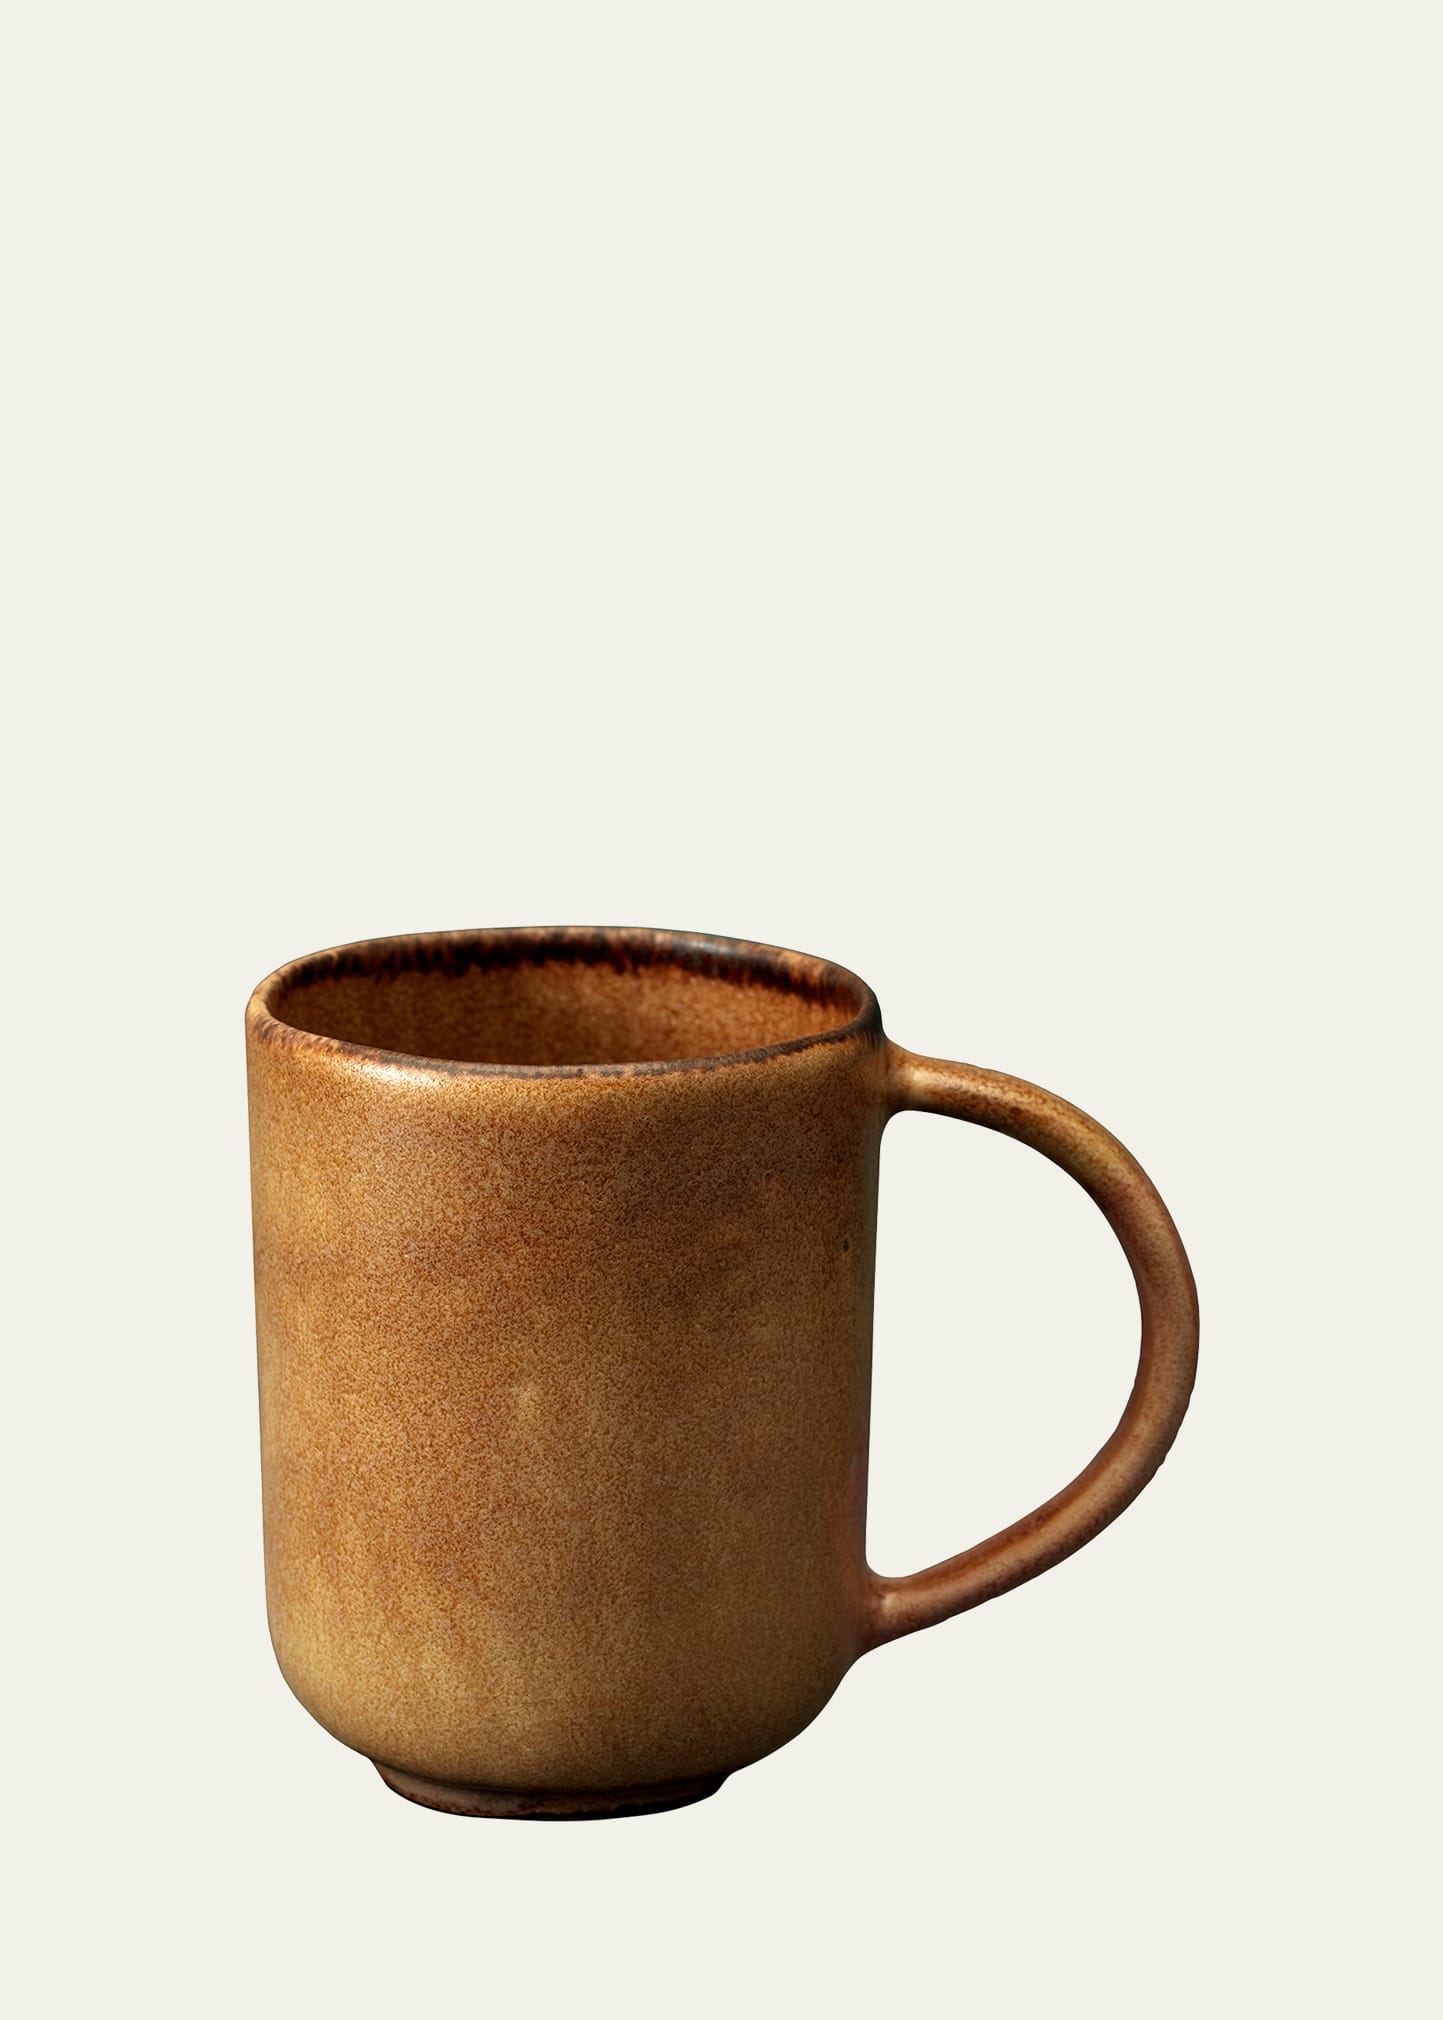 L'objet Terra Mug In Brown